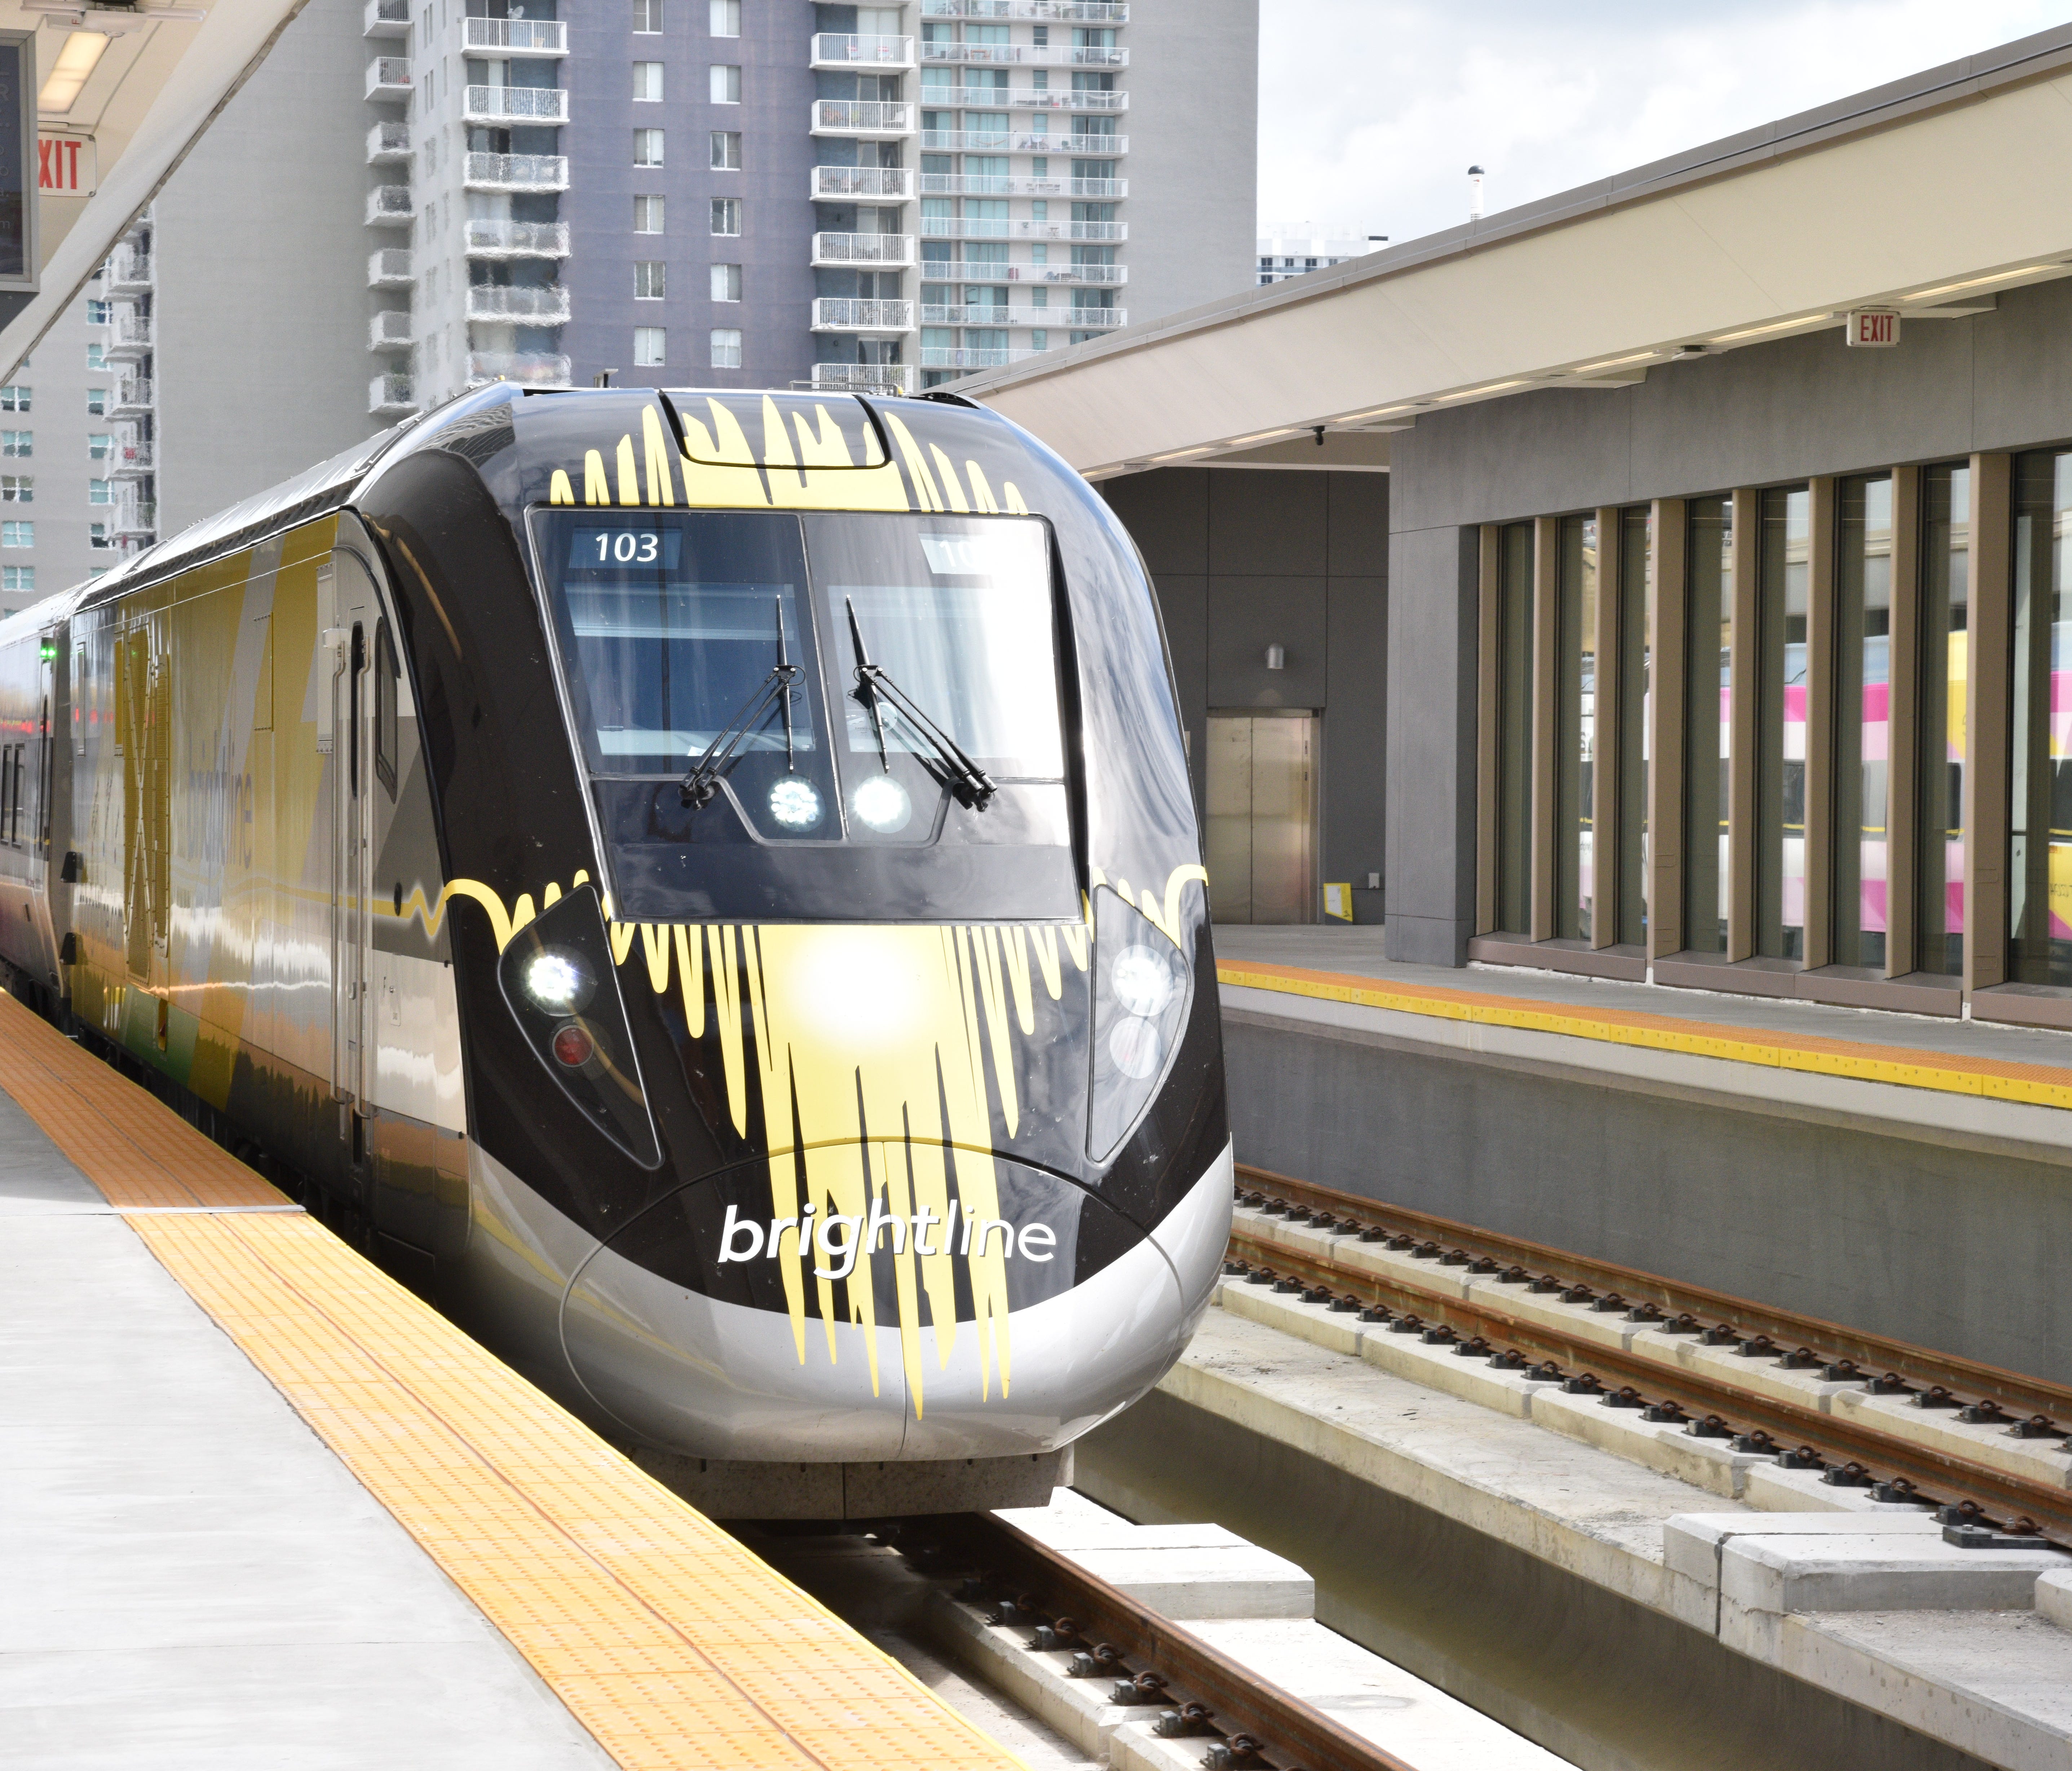 A Brightline train makes a test run through the new MiamiCentral station.